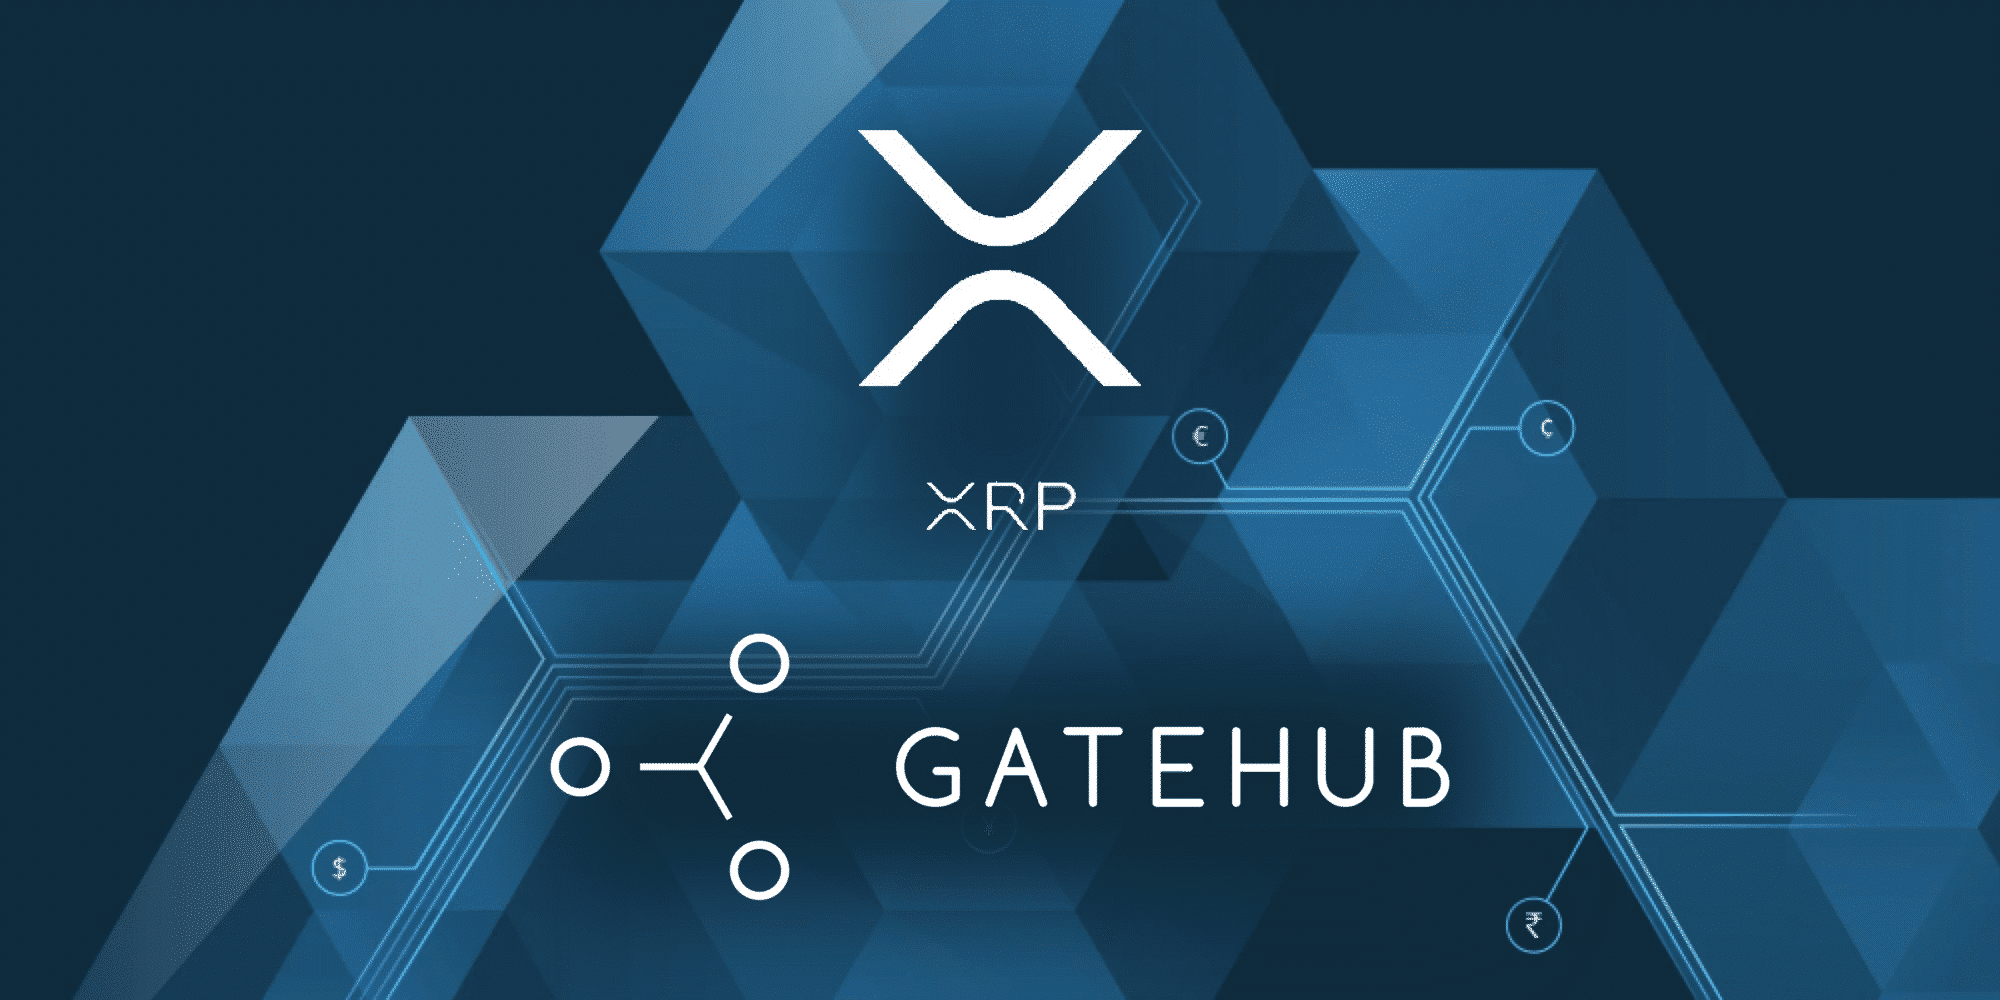 gatehub exchange btc for xrp